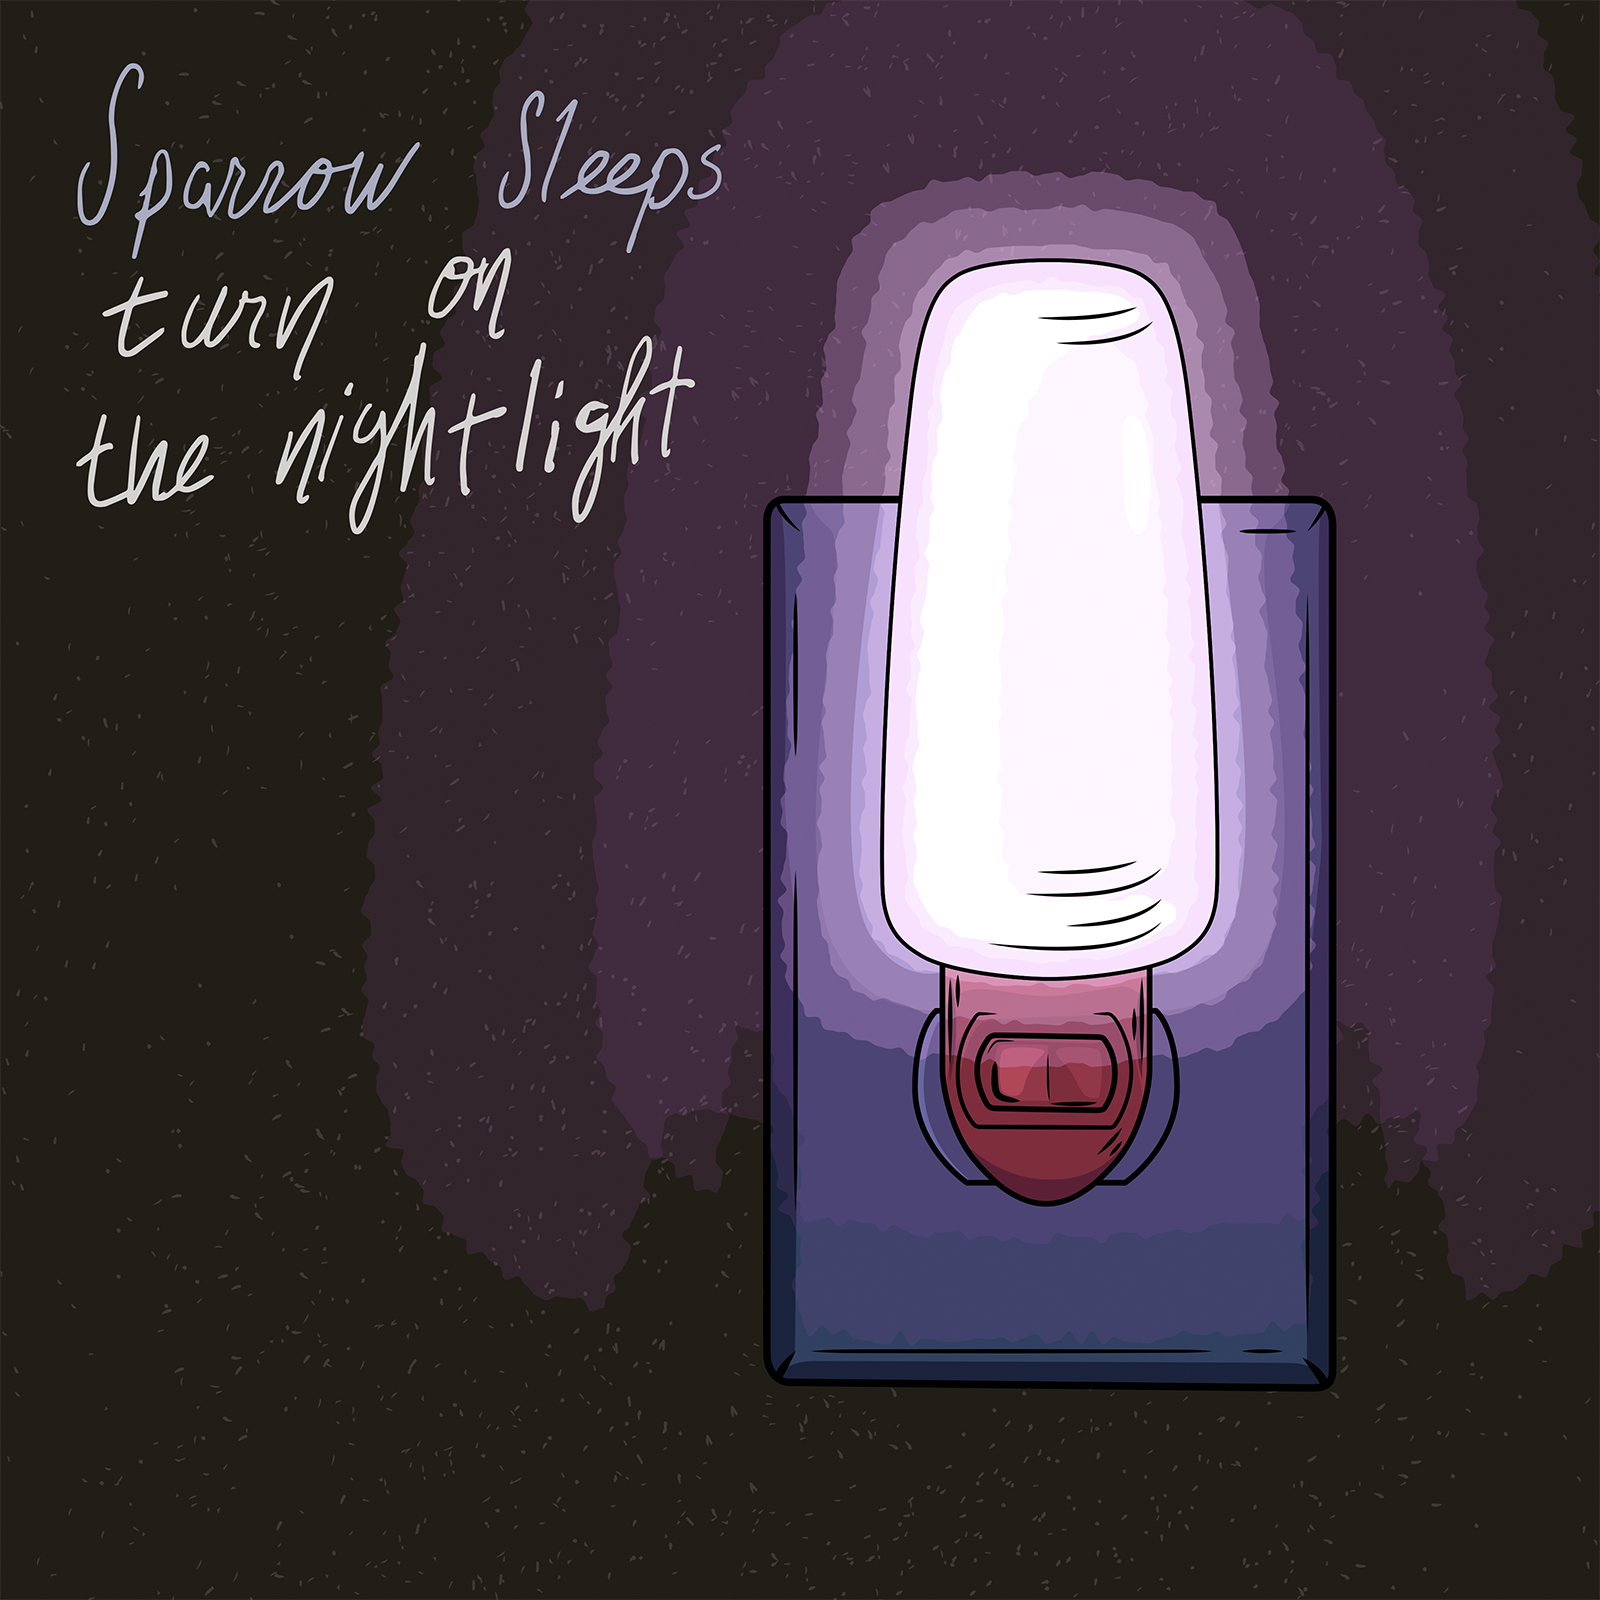 Turn On the Nightlight